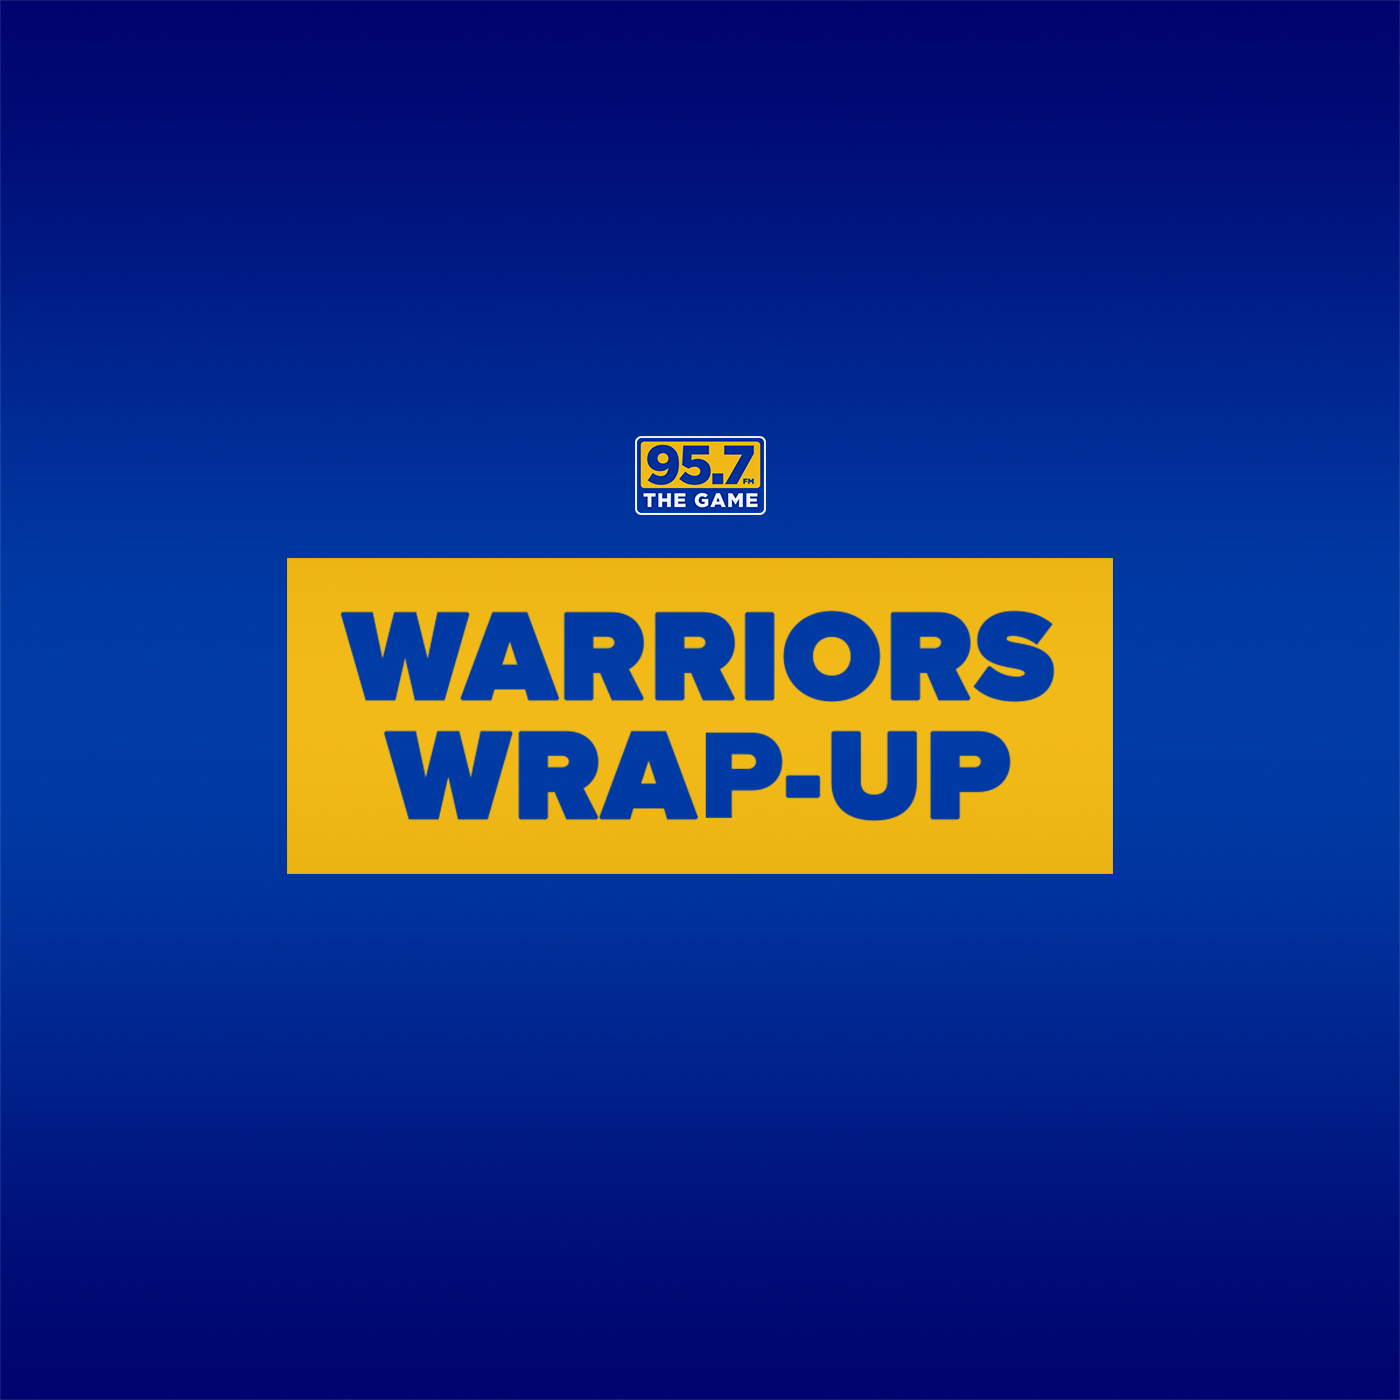 Wiggins and Poole lift Warriors over Raptors